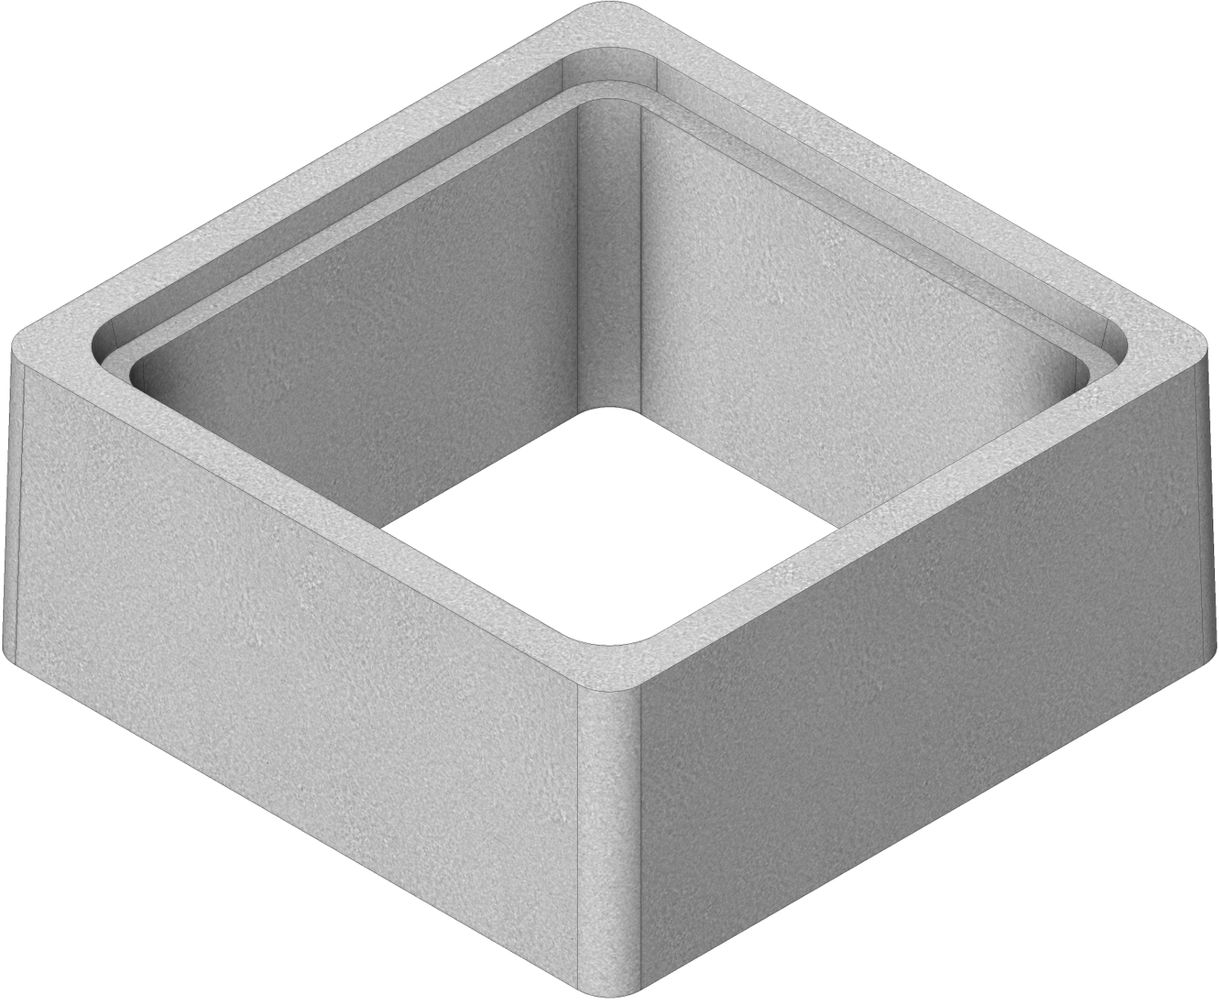 rehausse-beton-boite-pluviale-360x360-h320-thebault-0